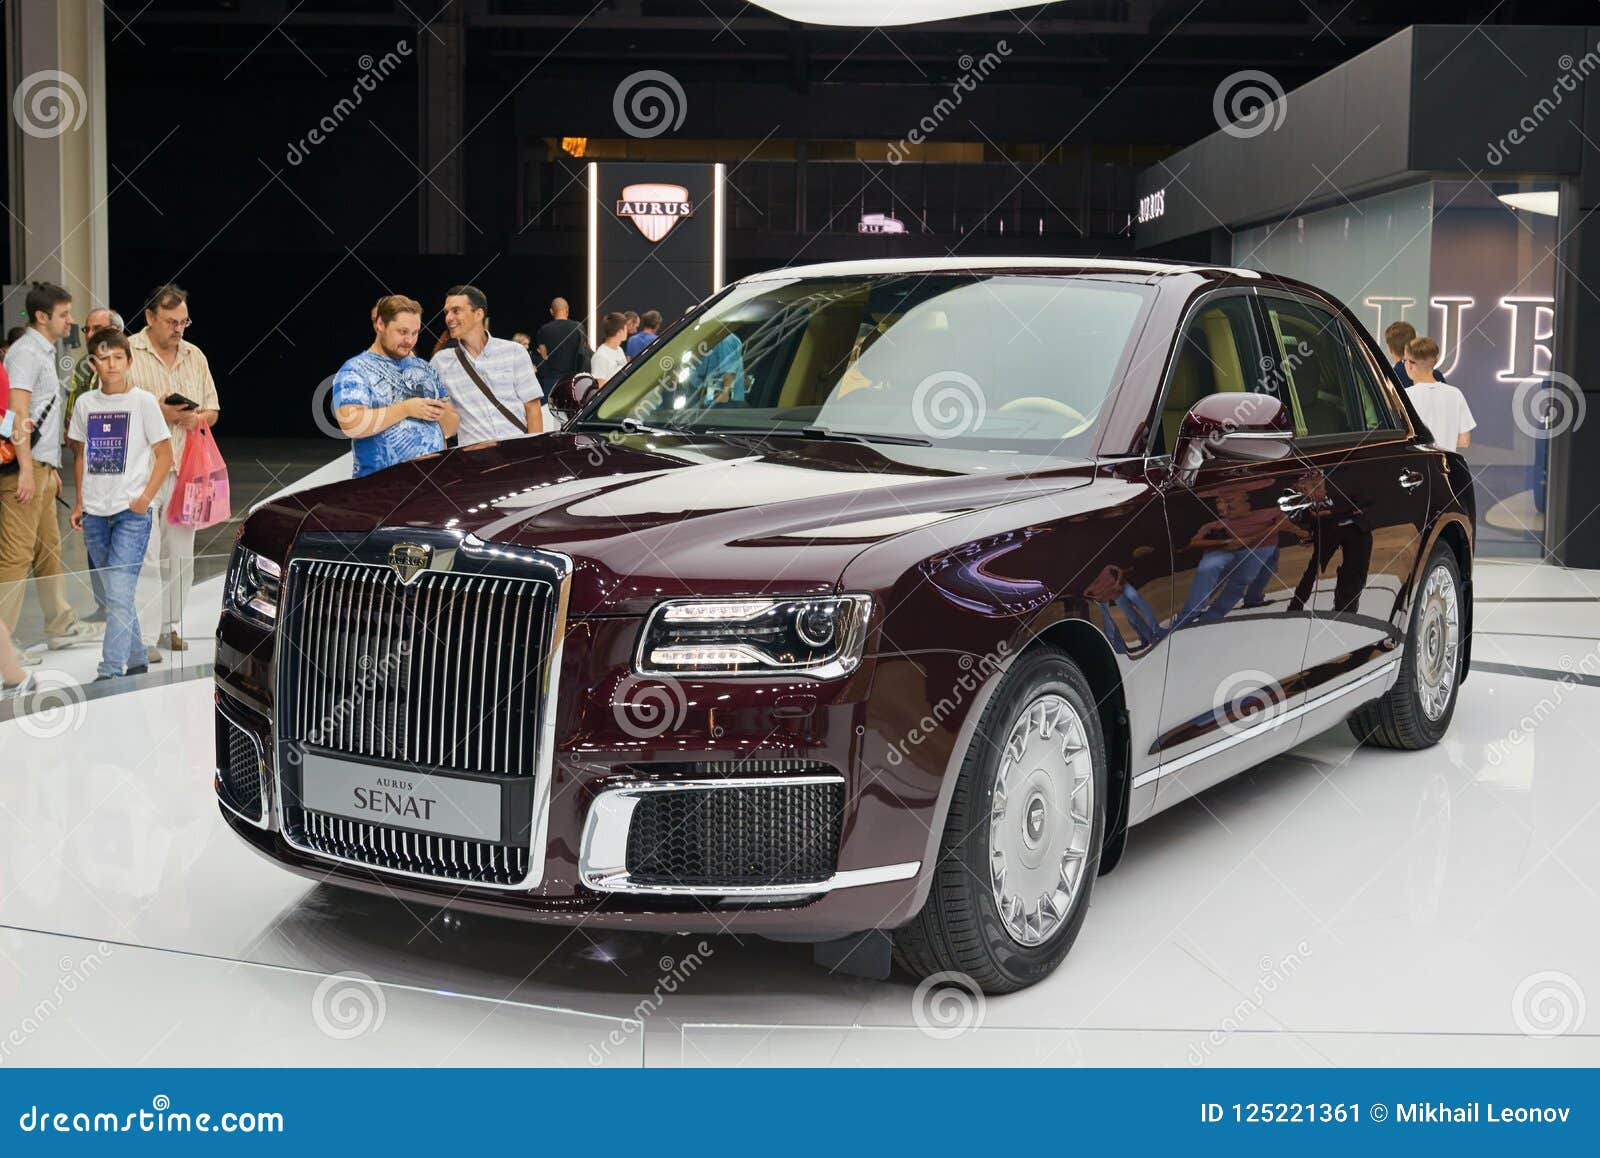 https://thumbs.dreamstime.com/z/moscow-aug-new-all-wheel-drive-powerful-russian-luxury-car-aurus-senat-automotive-exhibition-mmac-executive-ca-moscow-aug-new-125221361.jpg